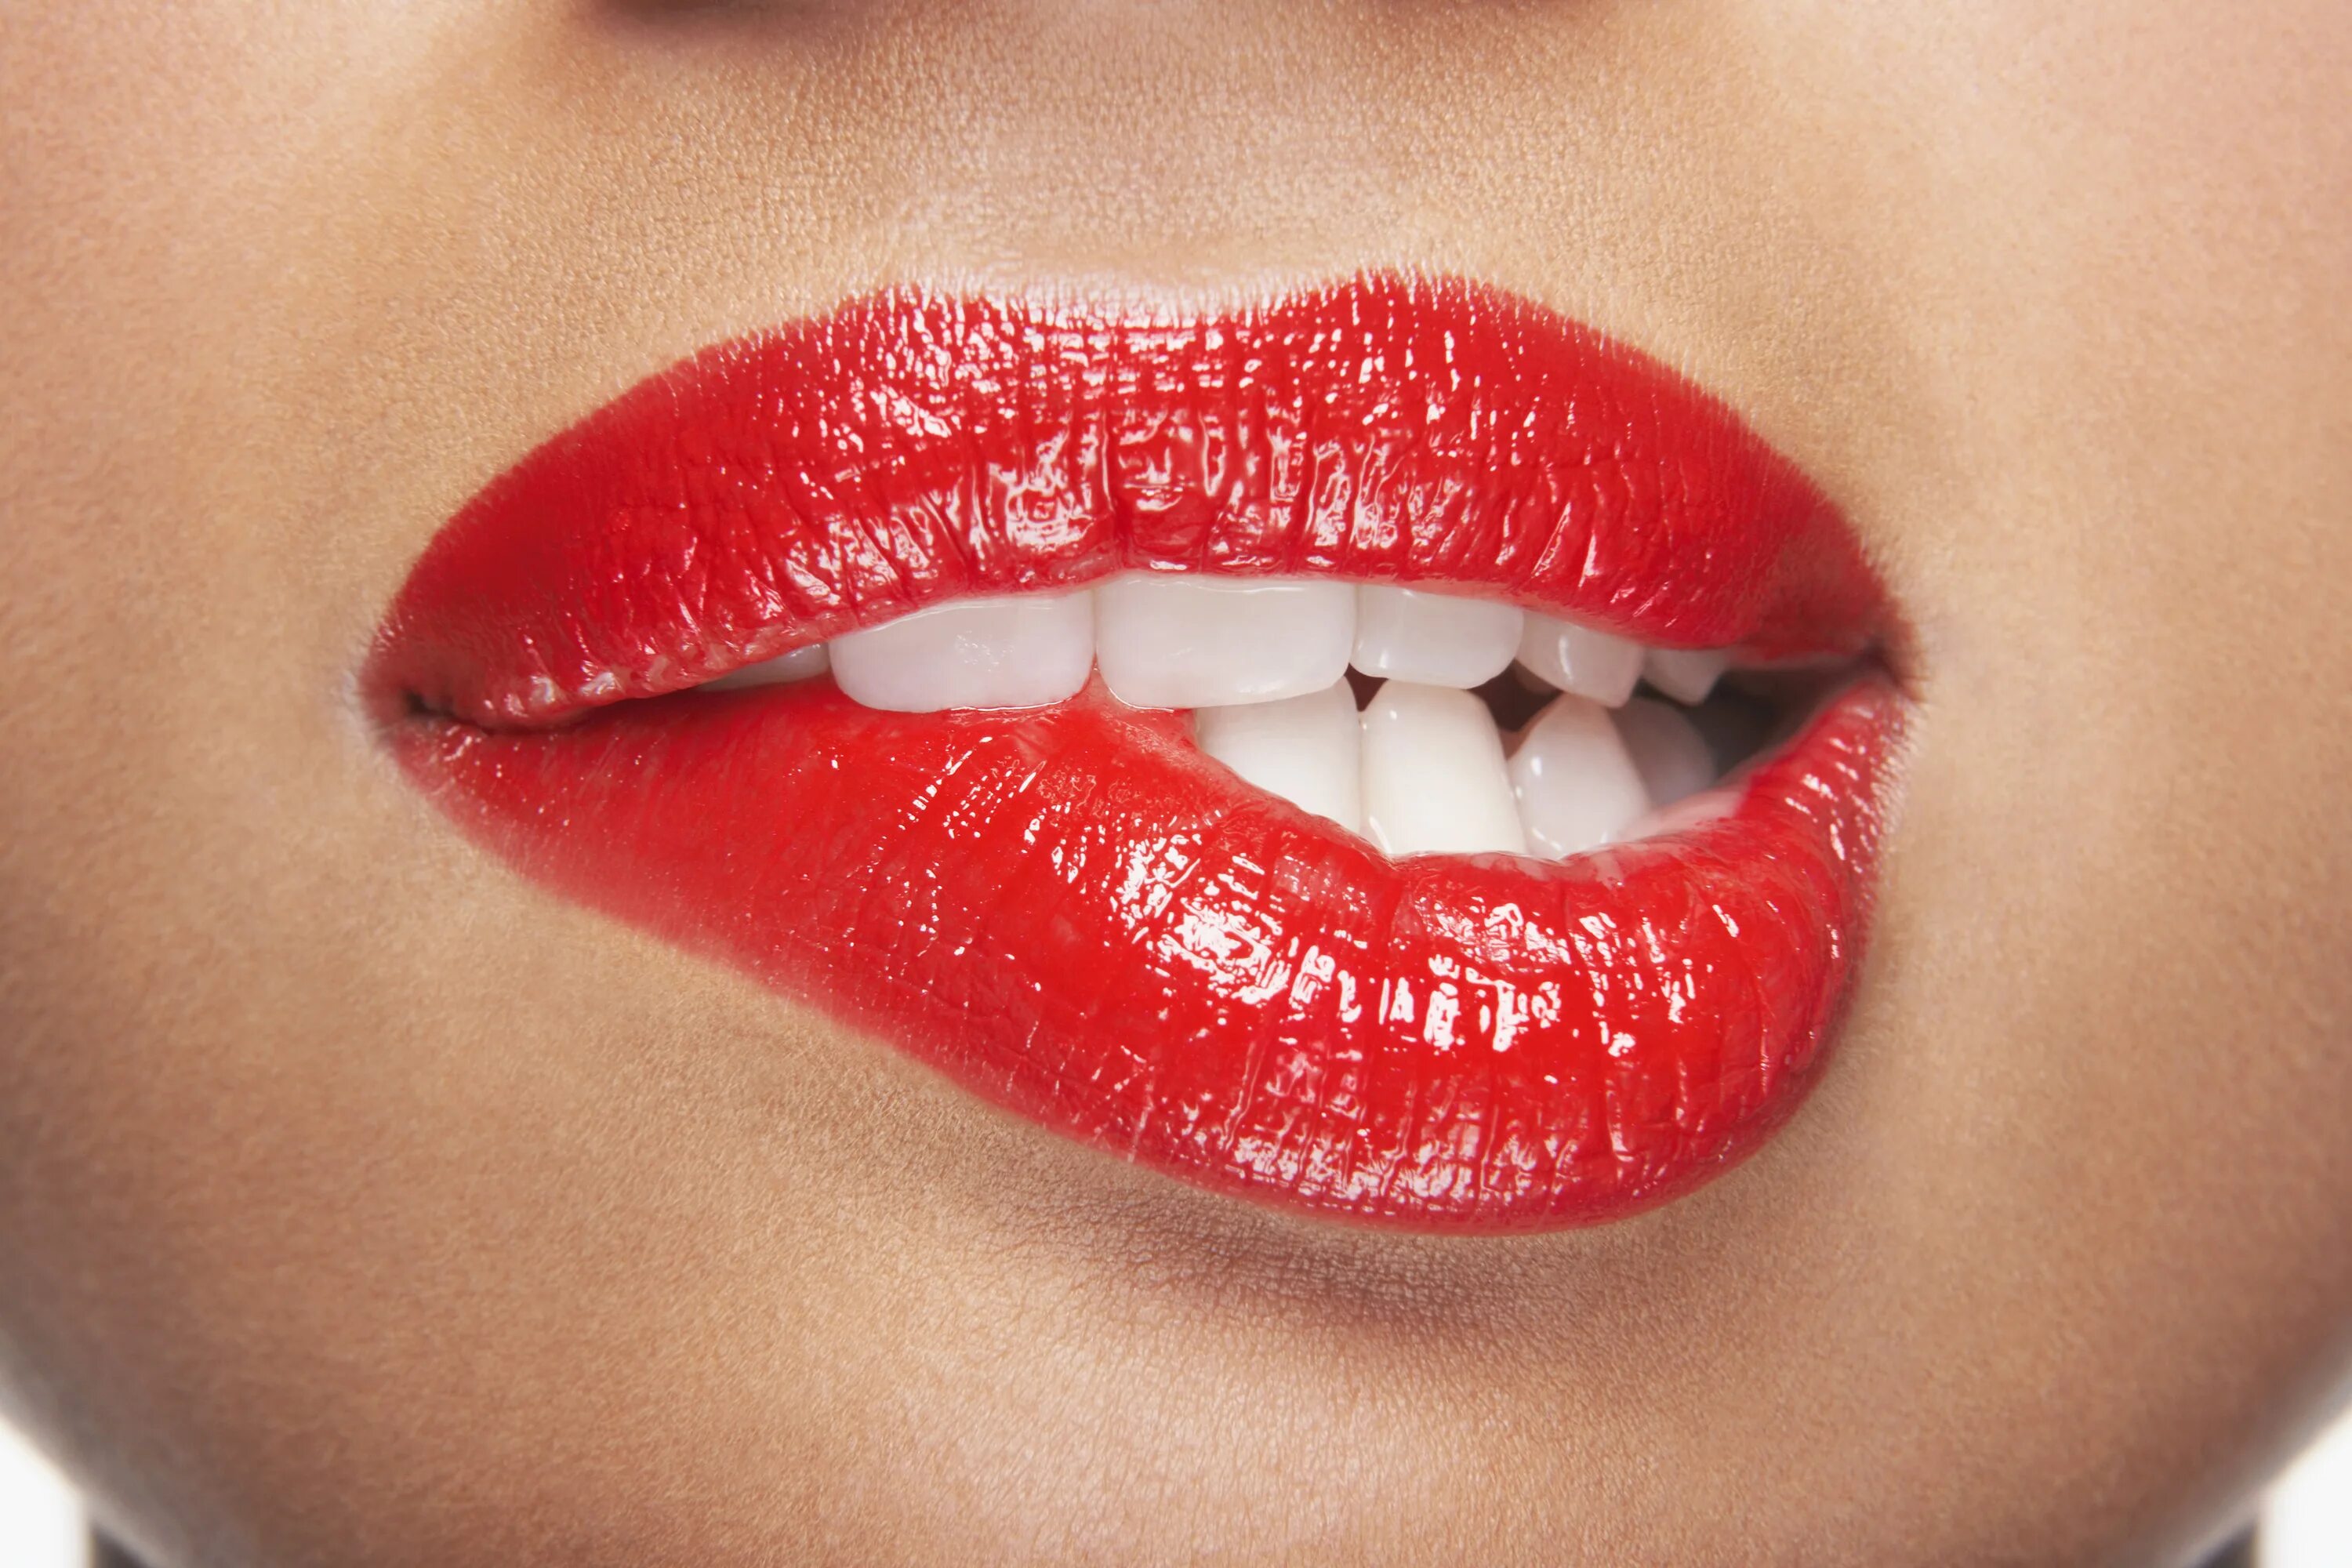 I love lips. Красивые губы. Красивые женские губы. Красные губы. Красивые губки.